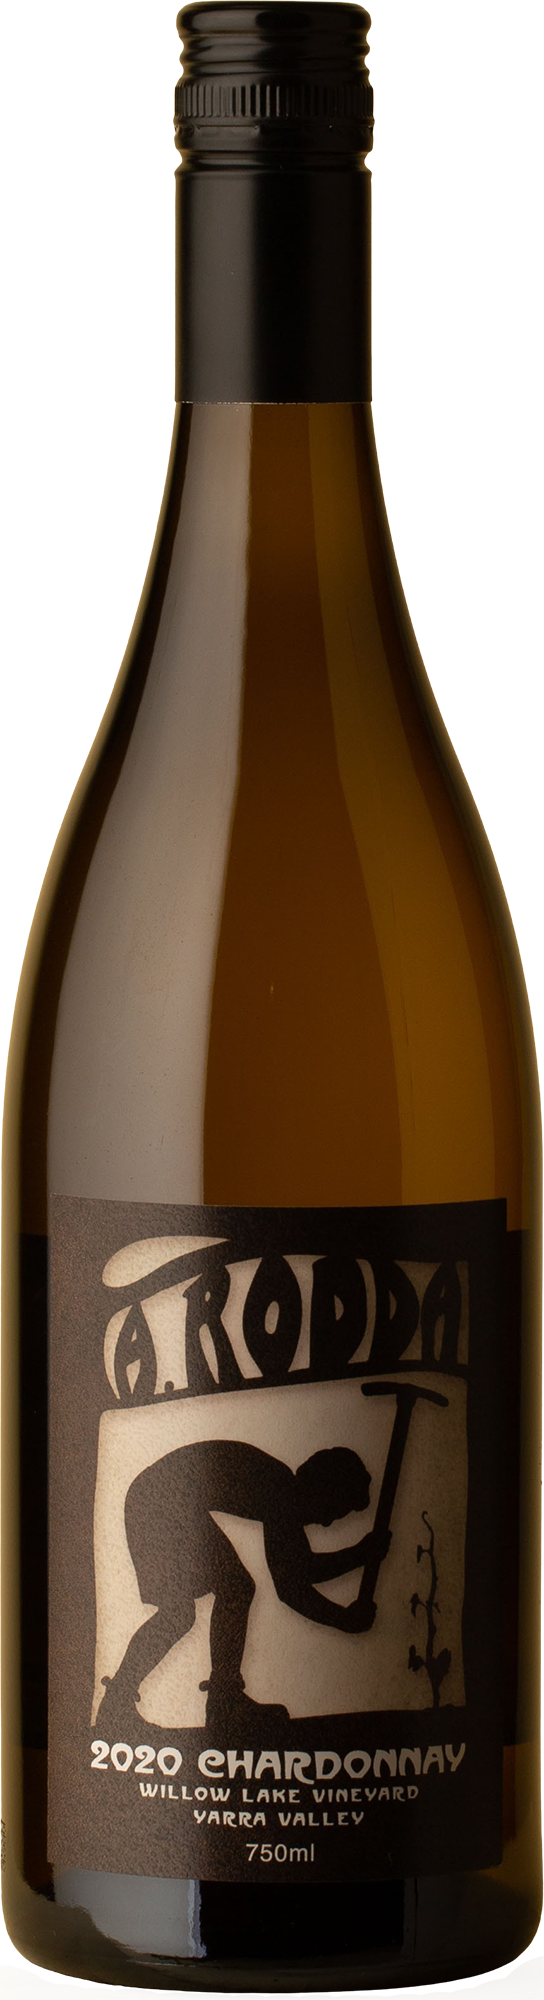 A Rodda - Willow Lake Chardonnay 2020 White Wine